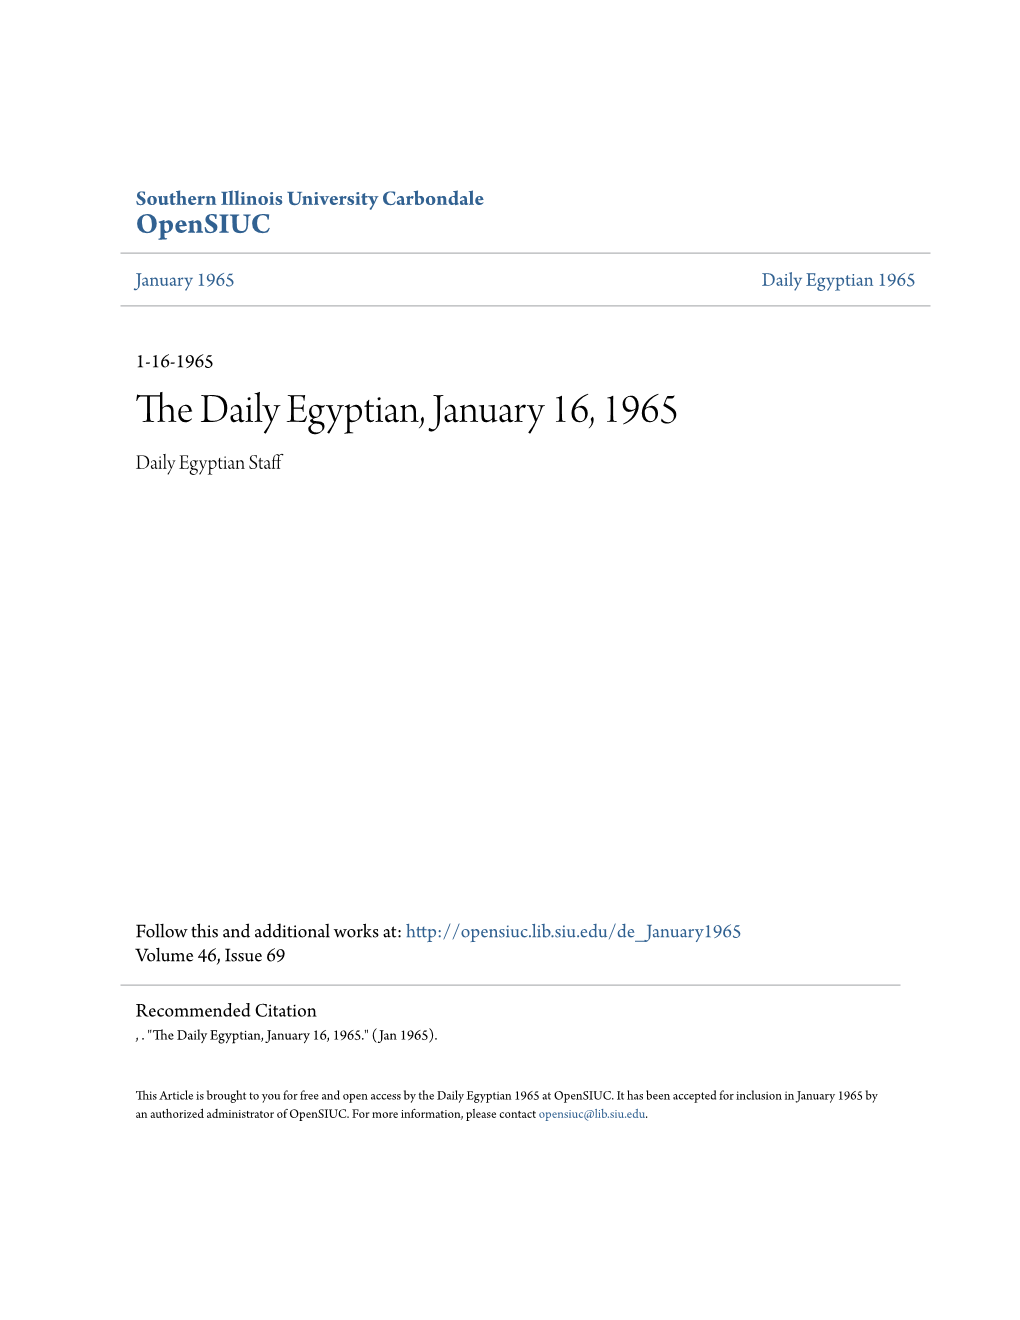 The Daily Egyptian, January 16, 1965